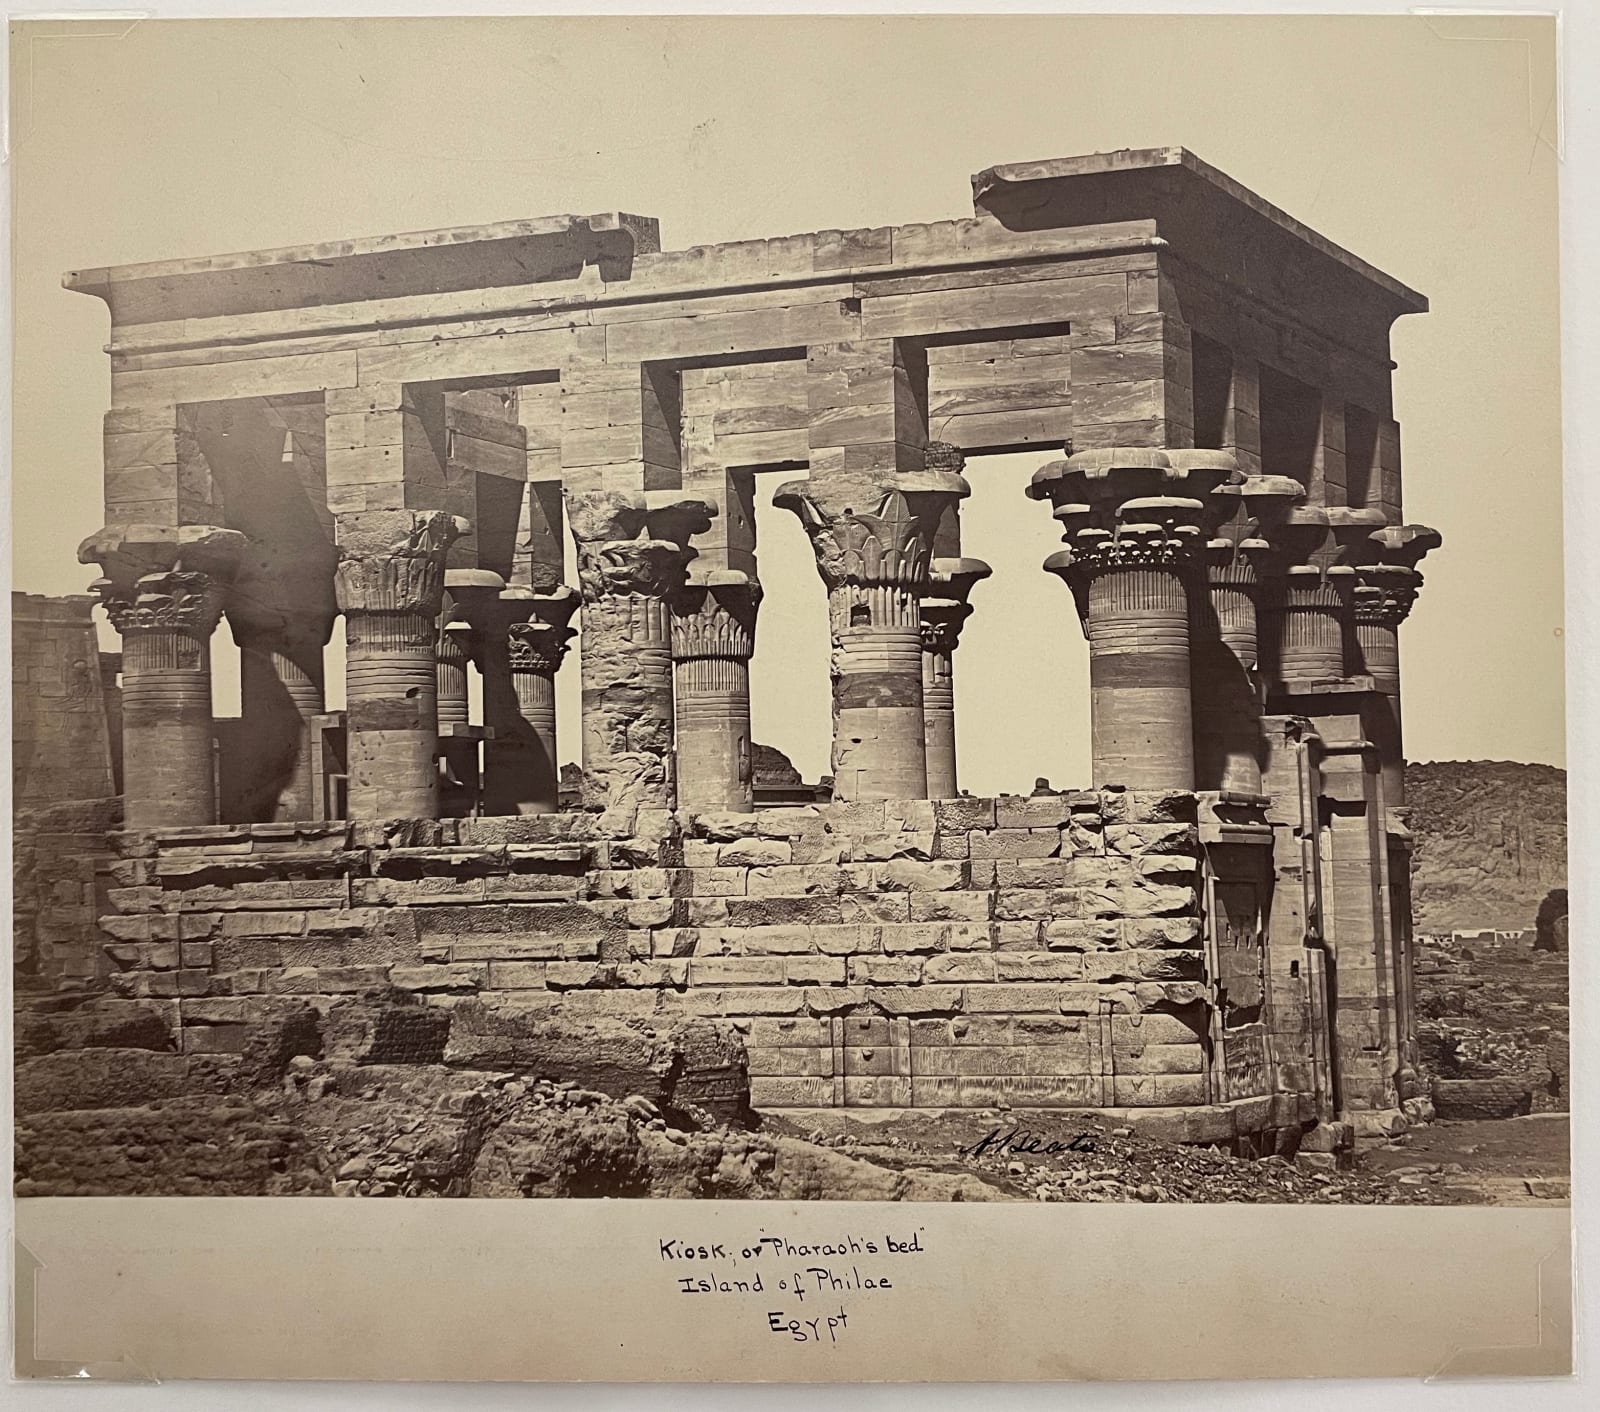 Antonio Beato, Trajan's Kiosk, or Pharaoh's Bed, Island of Philae, Egypt, c. 1887